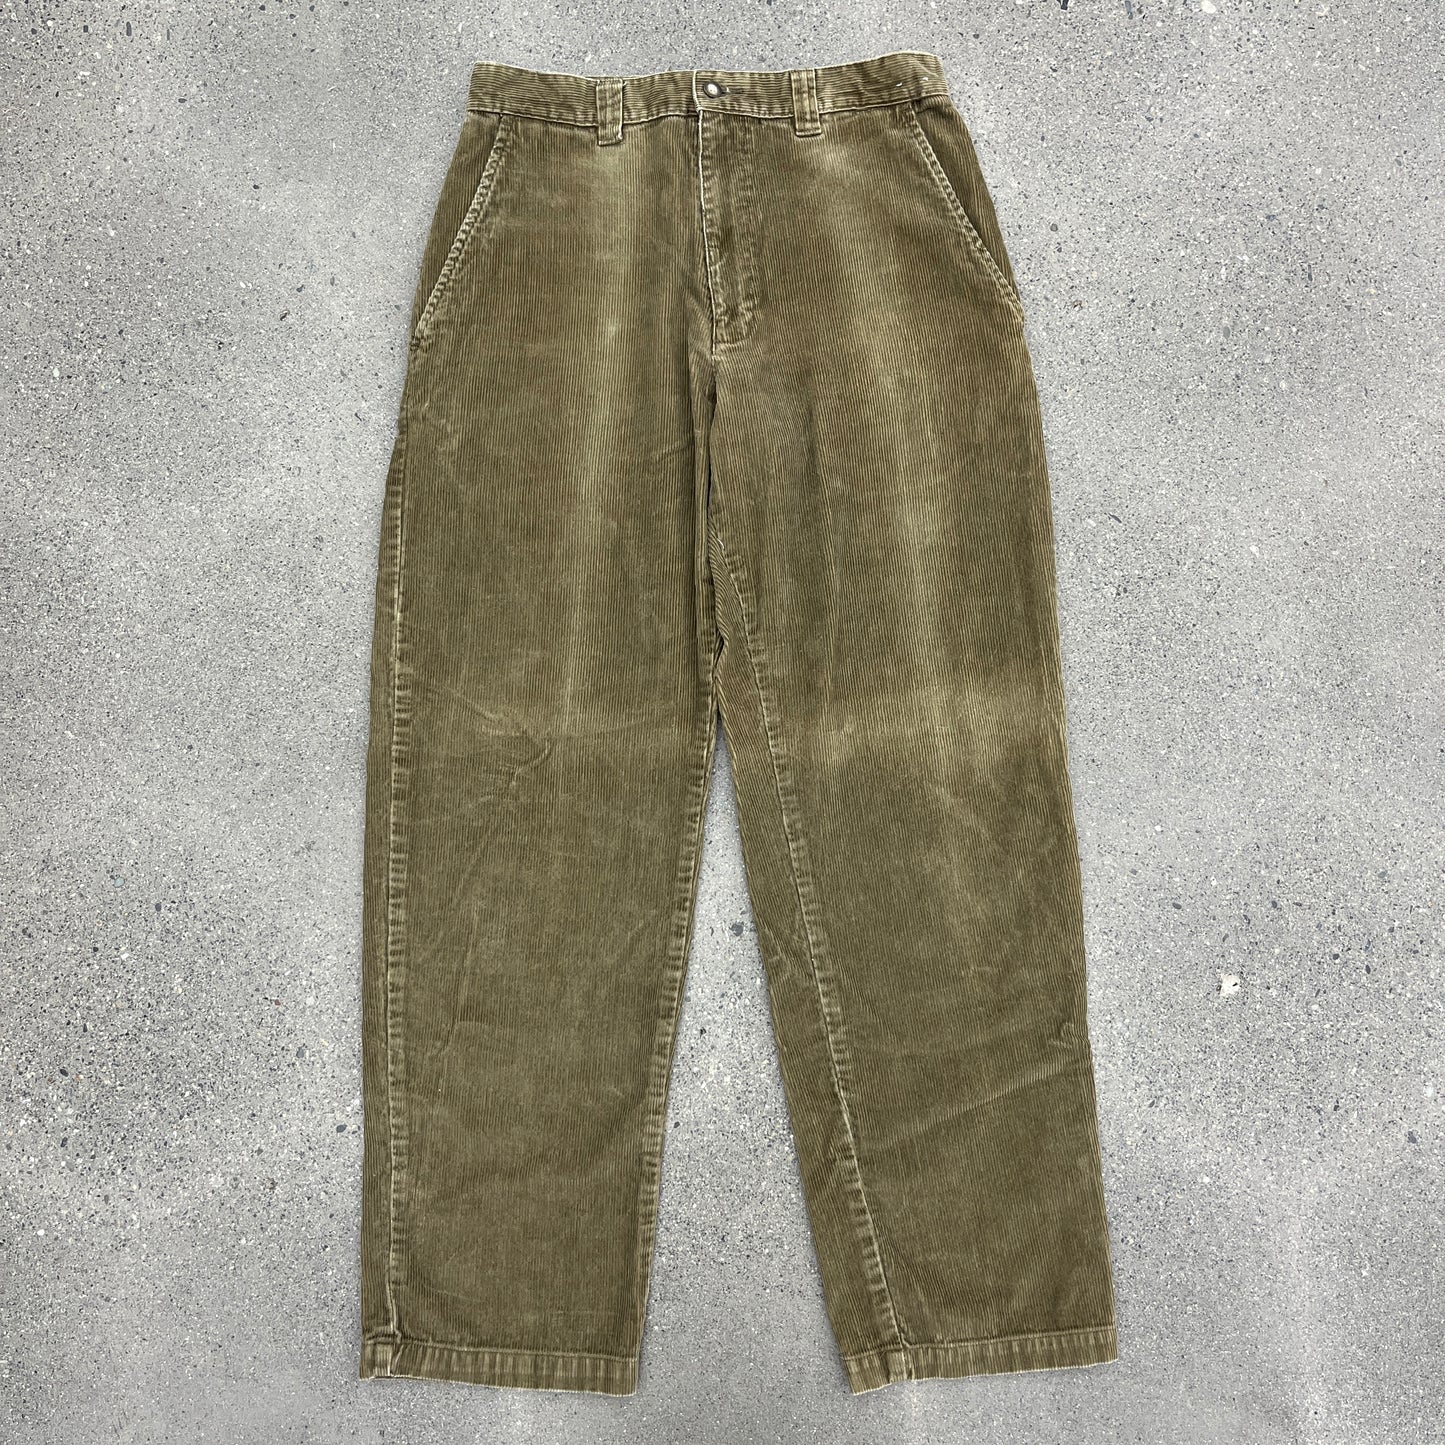 Vintage Corduroy Pants Olive SZ 30x30